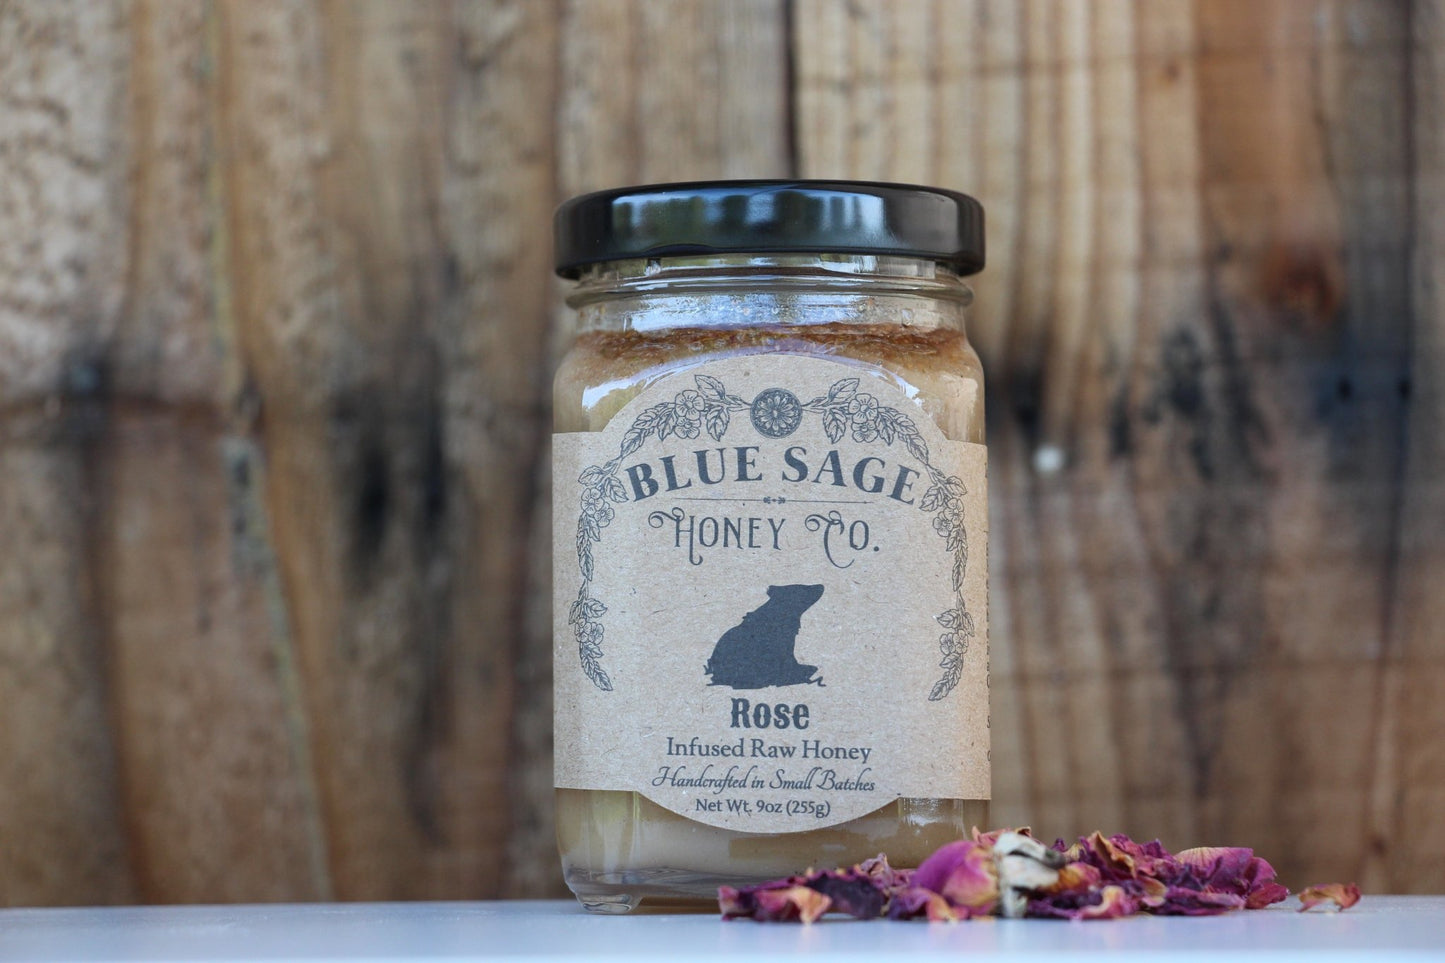 Rose Infused Raw Honey- Organic Red Rose Petals - Blue Sage Honey Co 5.5oz